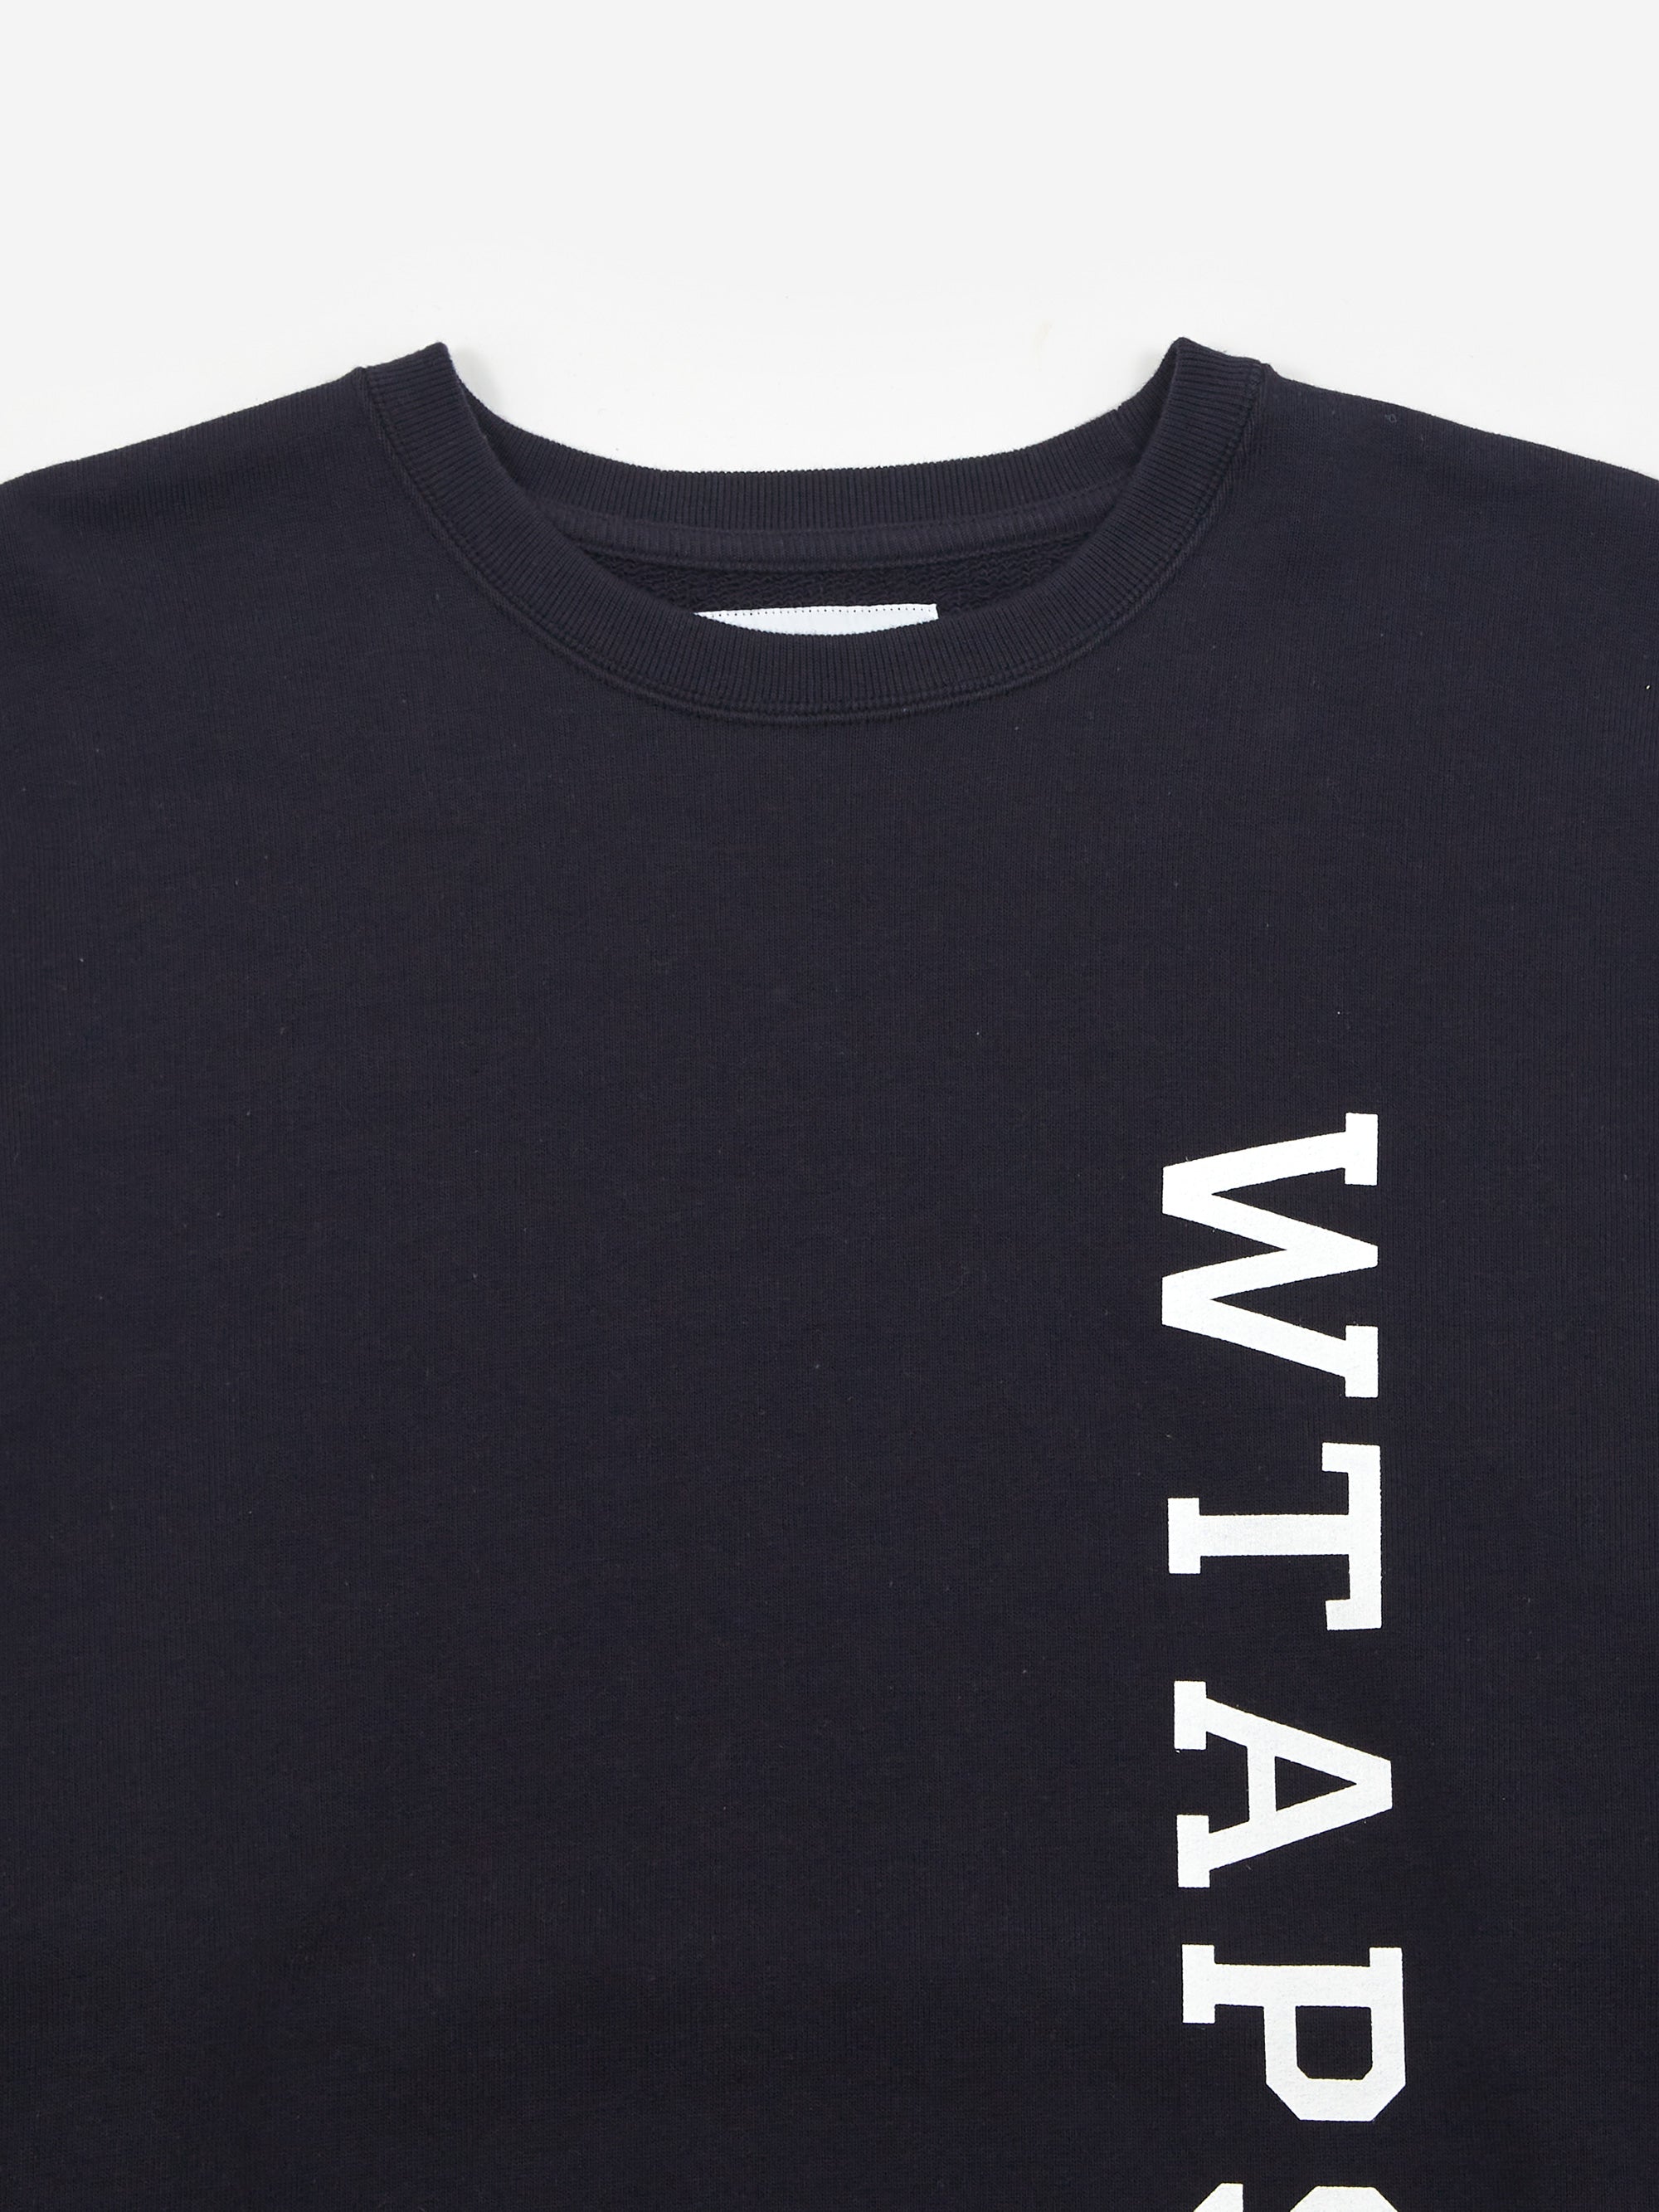 WTAPS Design 01 / Sweater / Cotton. College - Navy